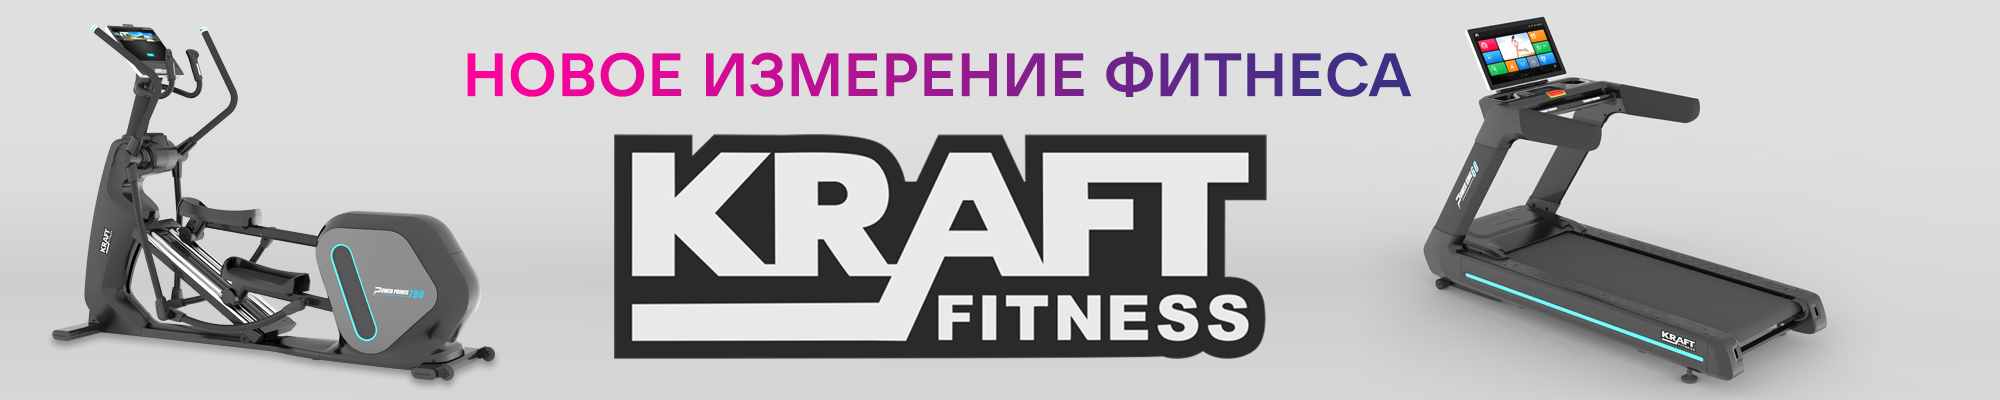 KRAFT Fitness